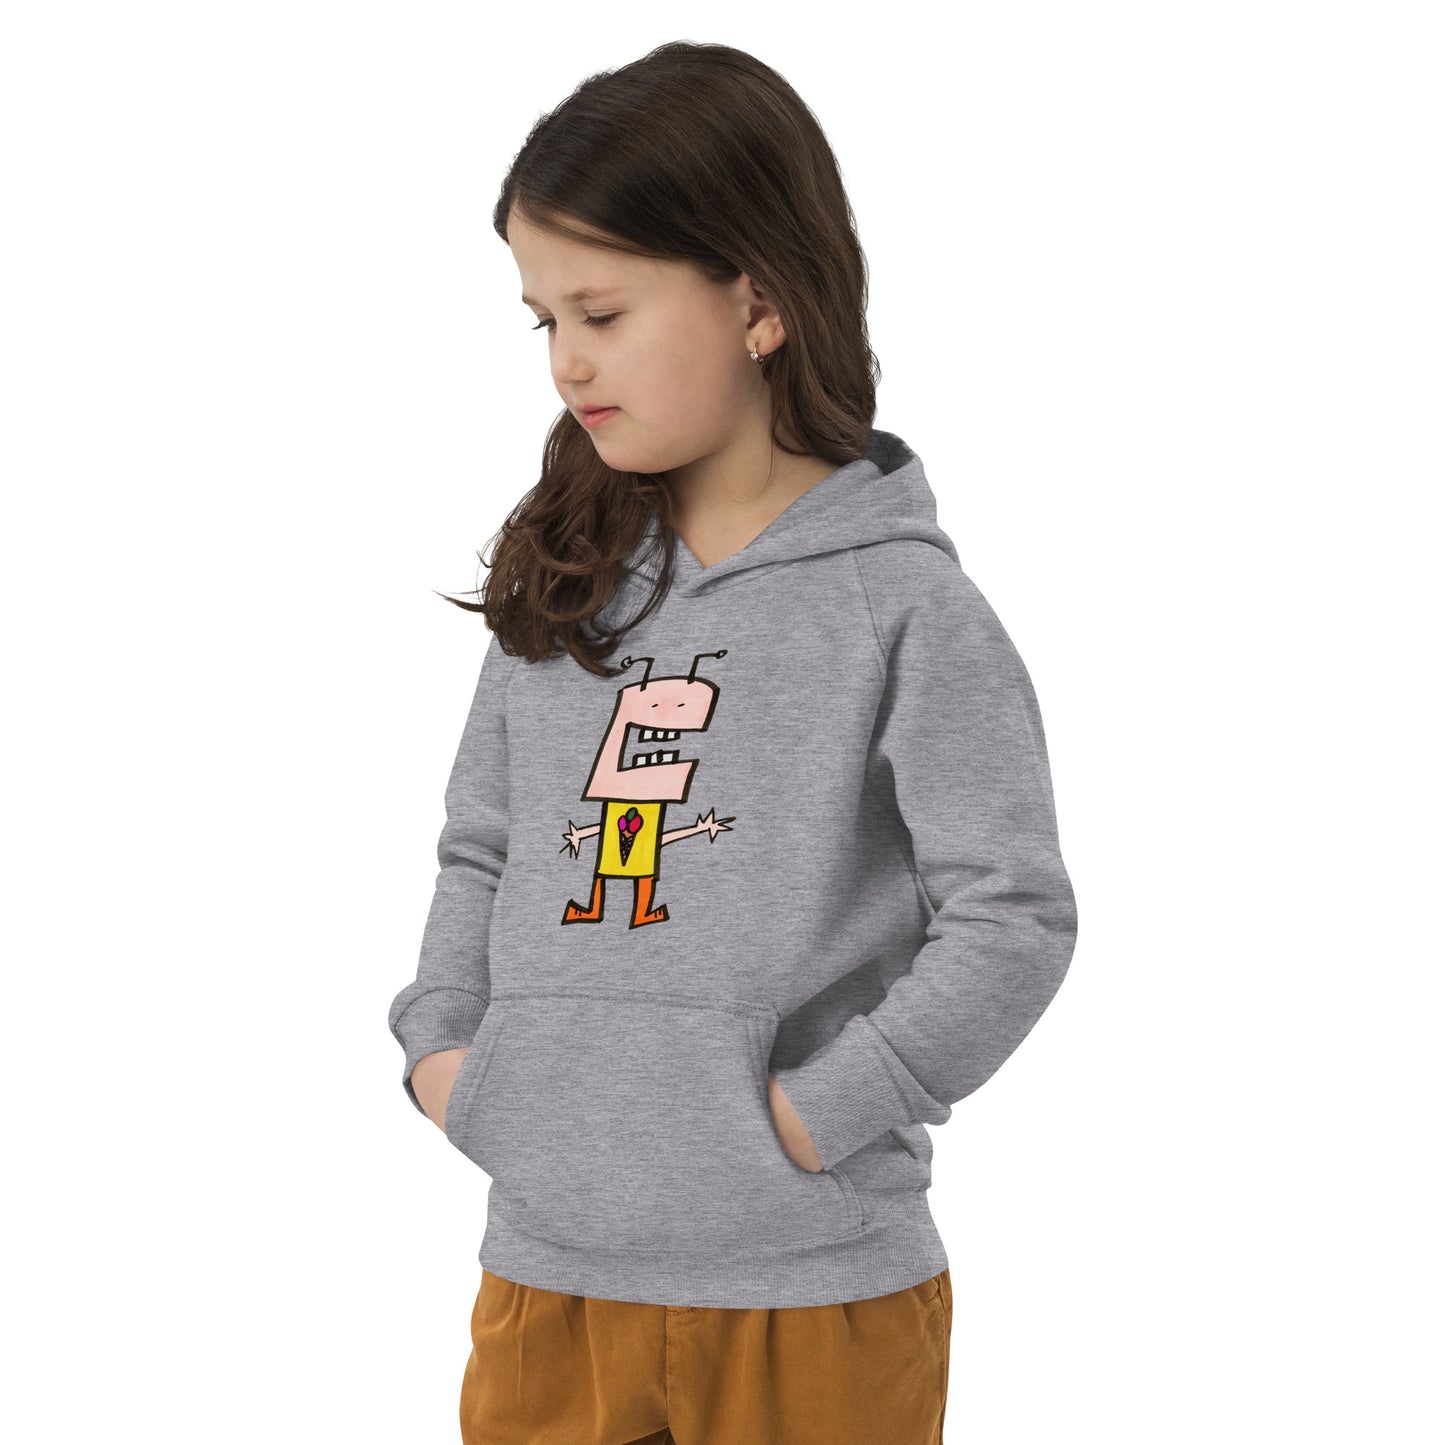 Kids eco hoodie - I Love Ice-cream THIS much